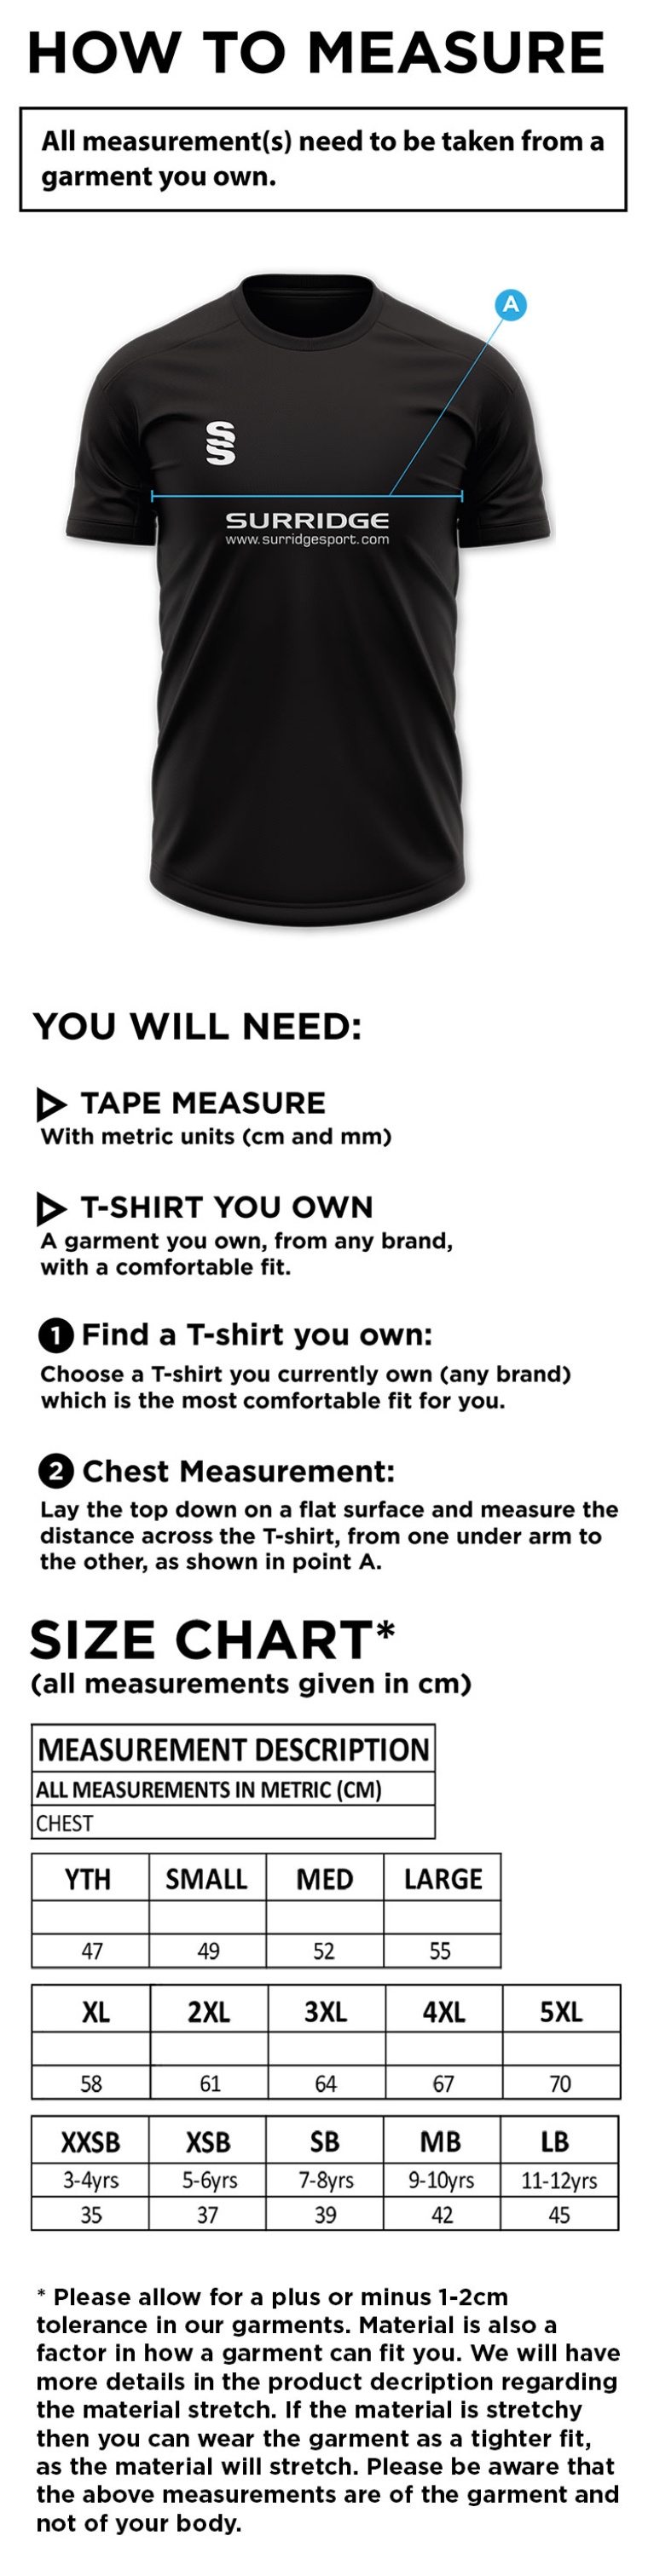 Blade Polo Shirt : Navy / Royal / Amber - Size Guide